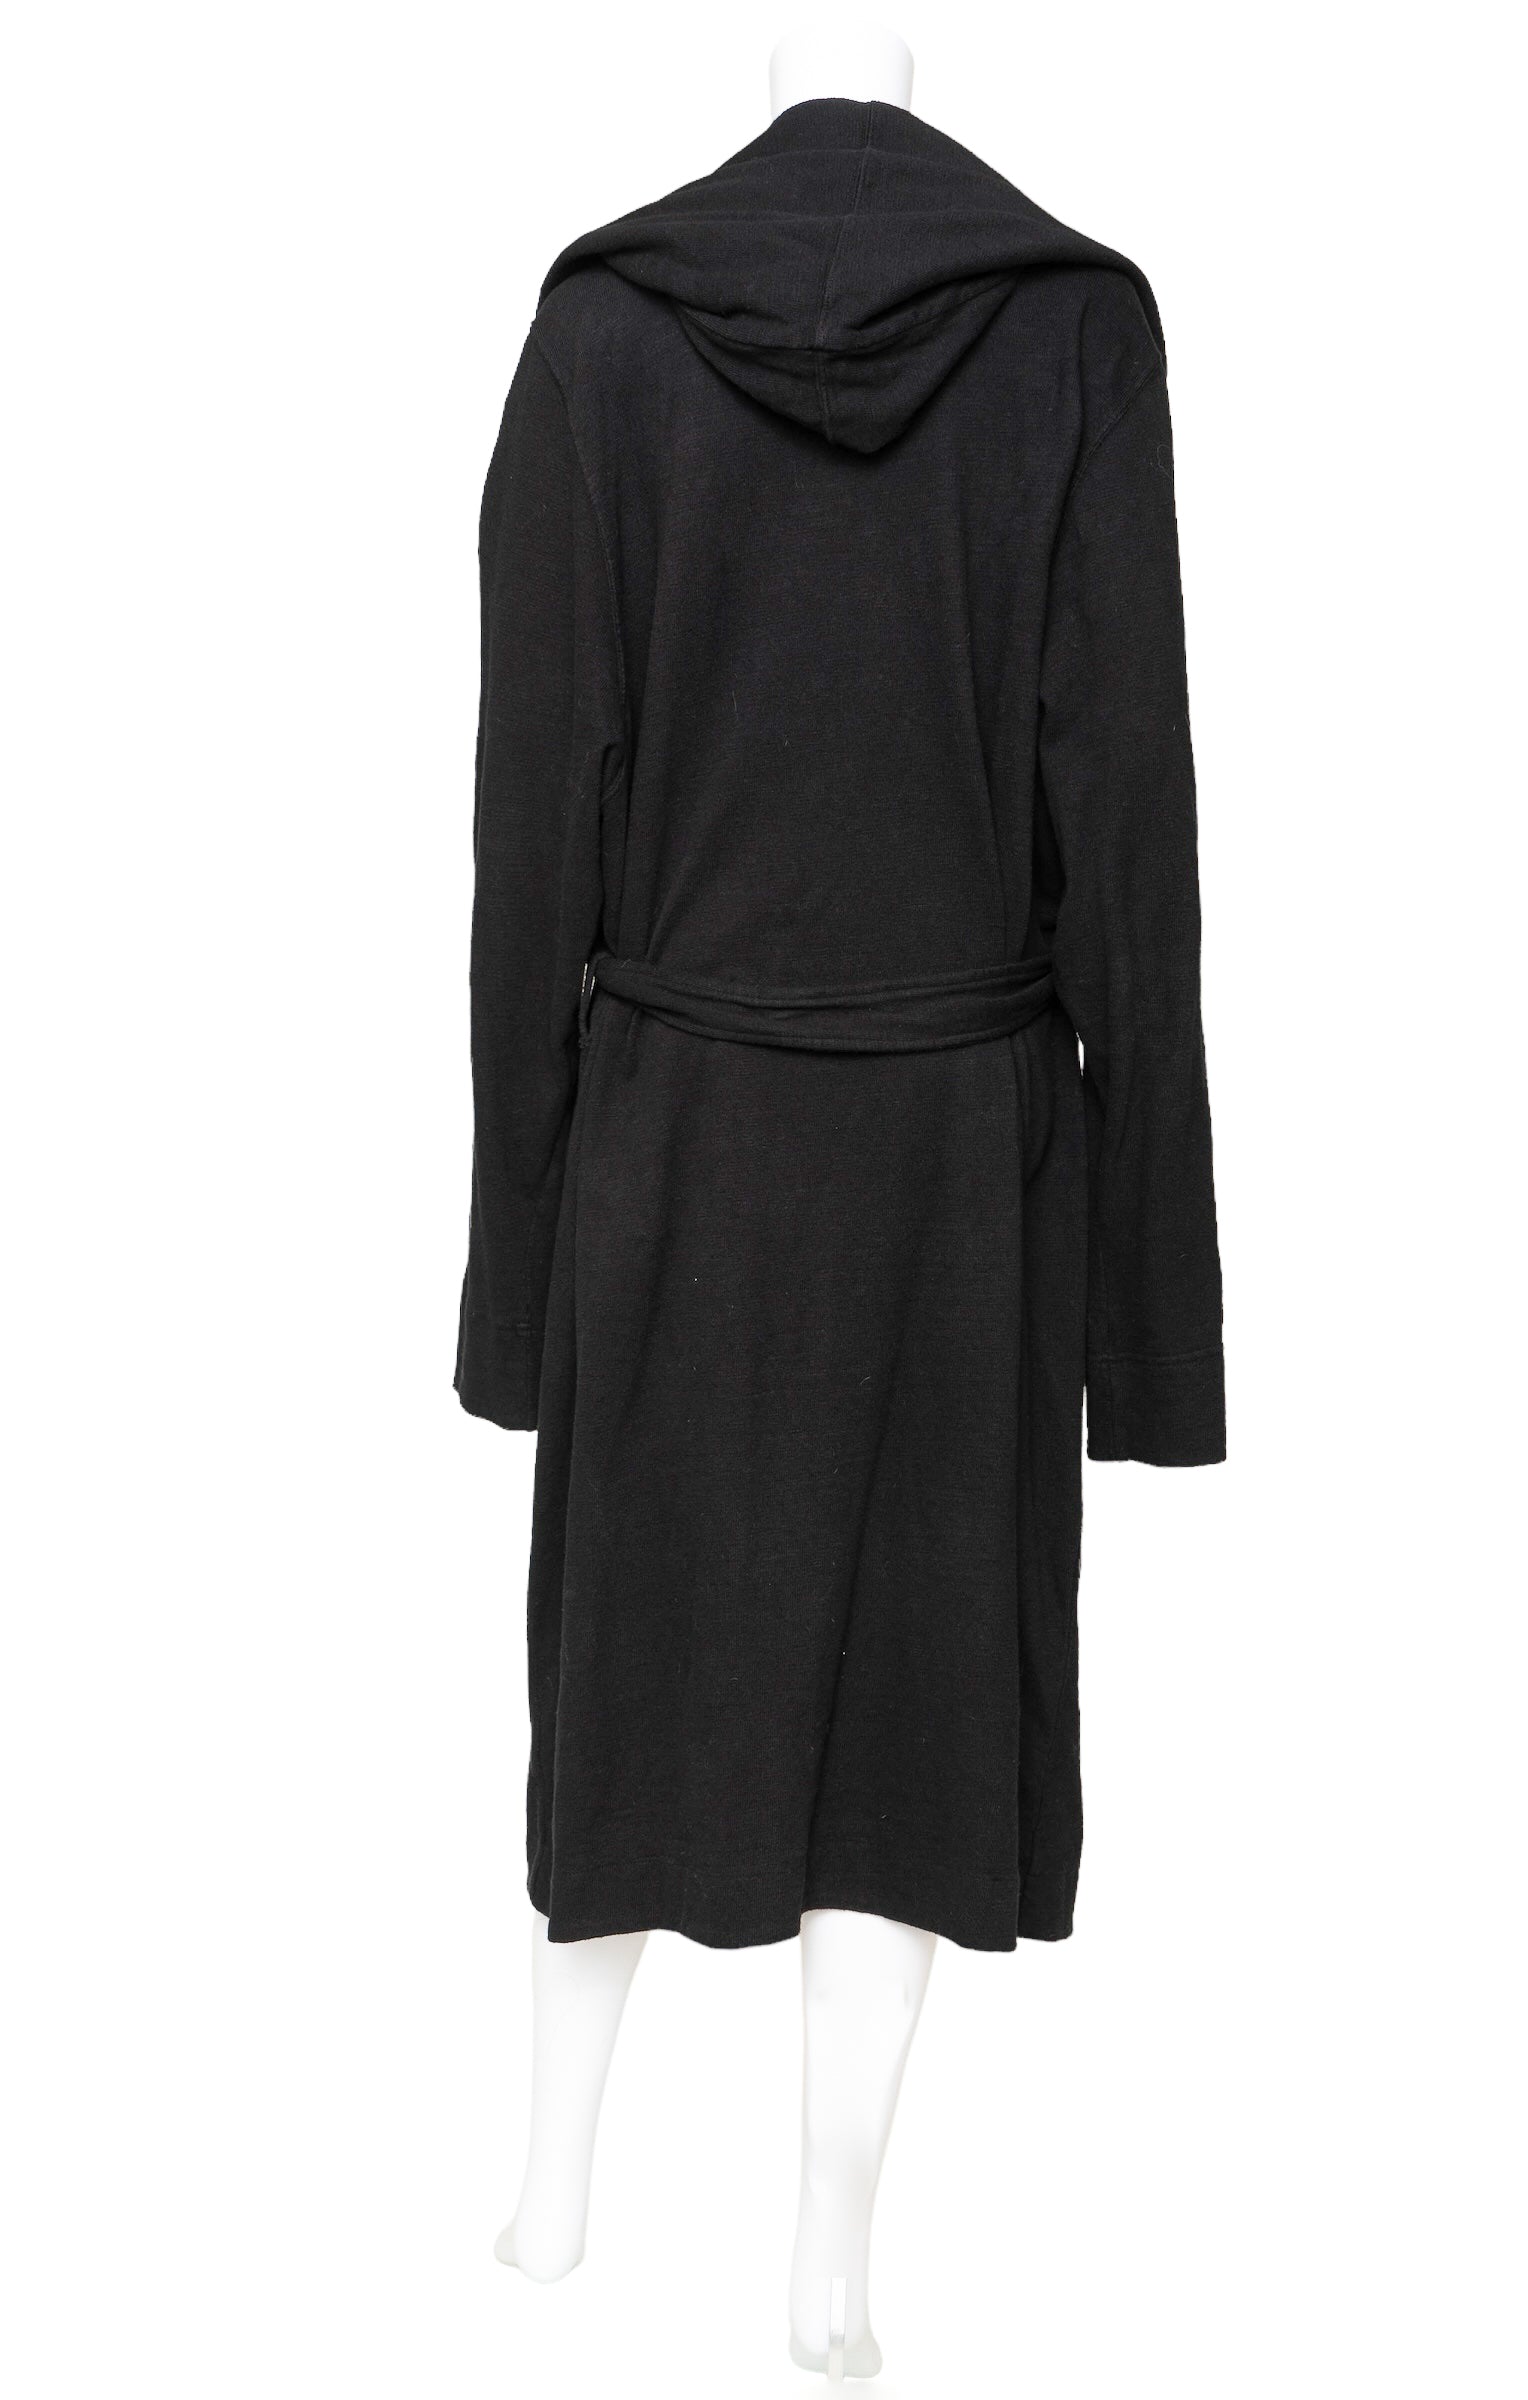 RICK OWENS (RARE) Robe / Coat Size: No size tags, fits like M/L